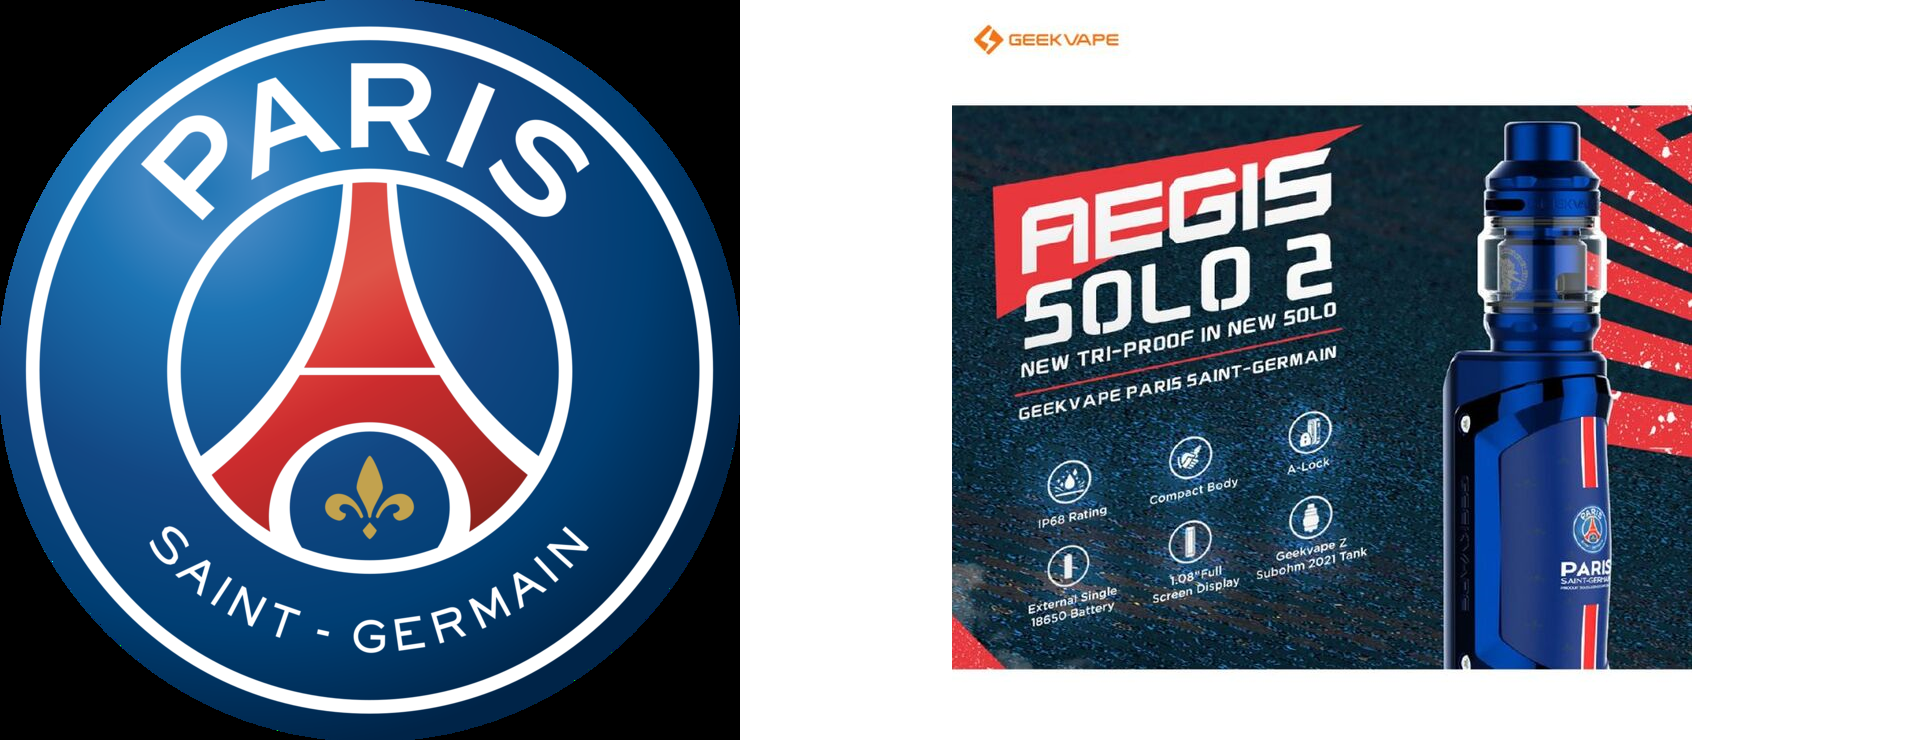 Aegis Solo 2 S100 PSG Edition Geekvape